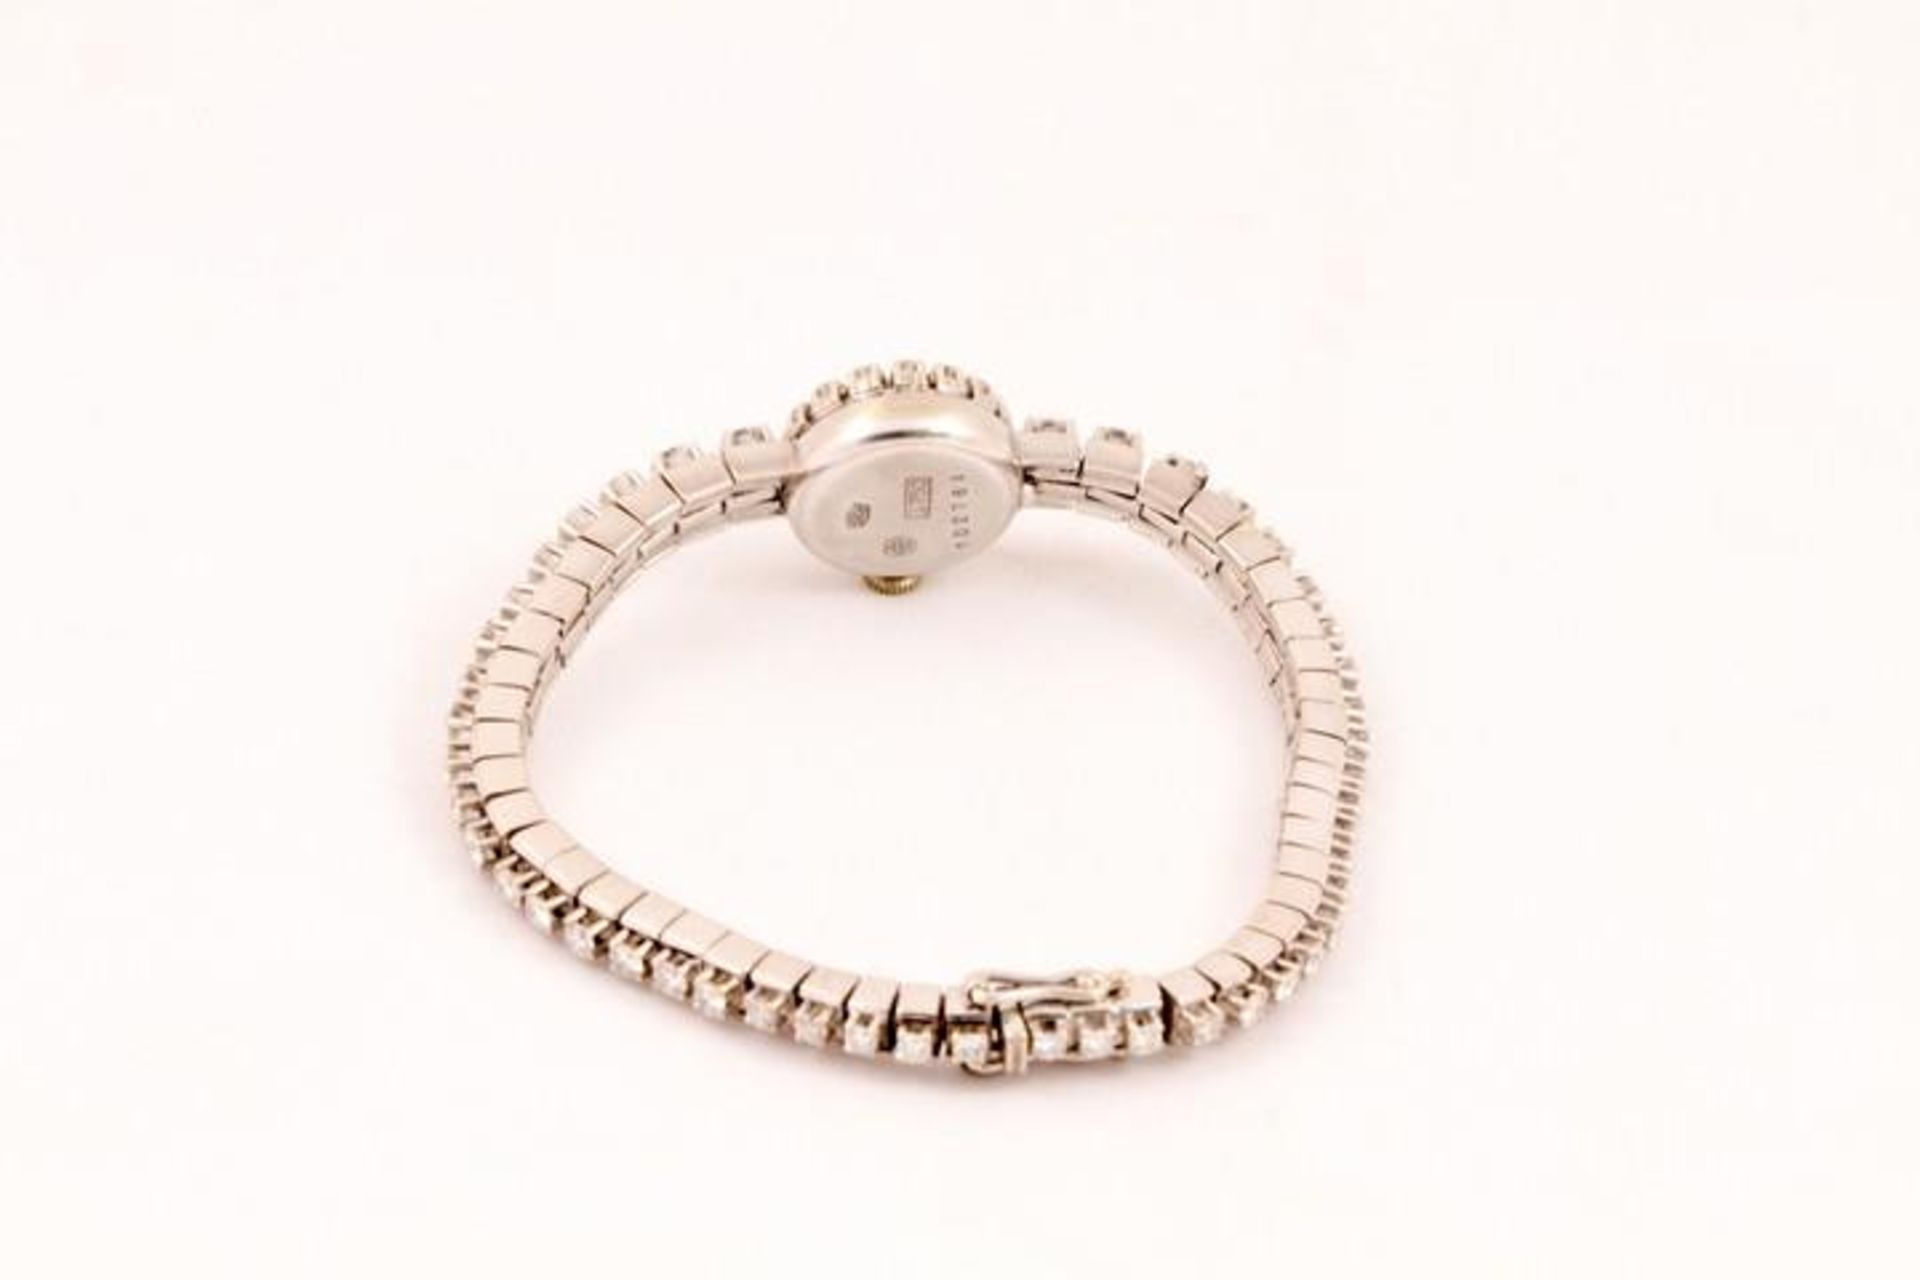 Ebel Ladies 18ct White Gold 36GM Watch with Diamond Bezel and Bracelet. 62 Diamonds approximately - Image 4 of 4